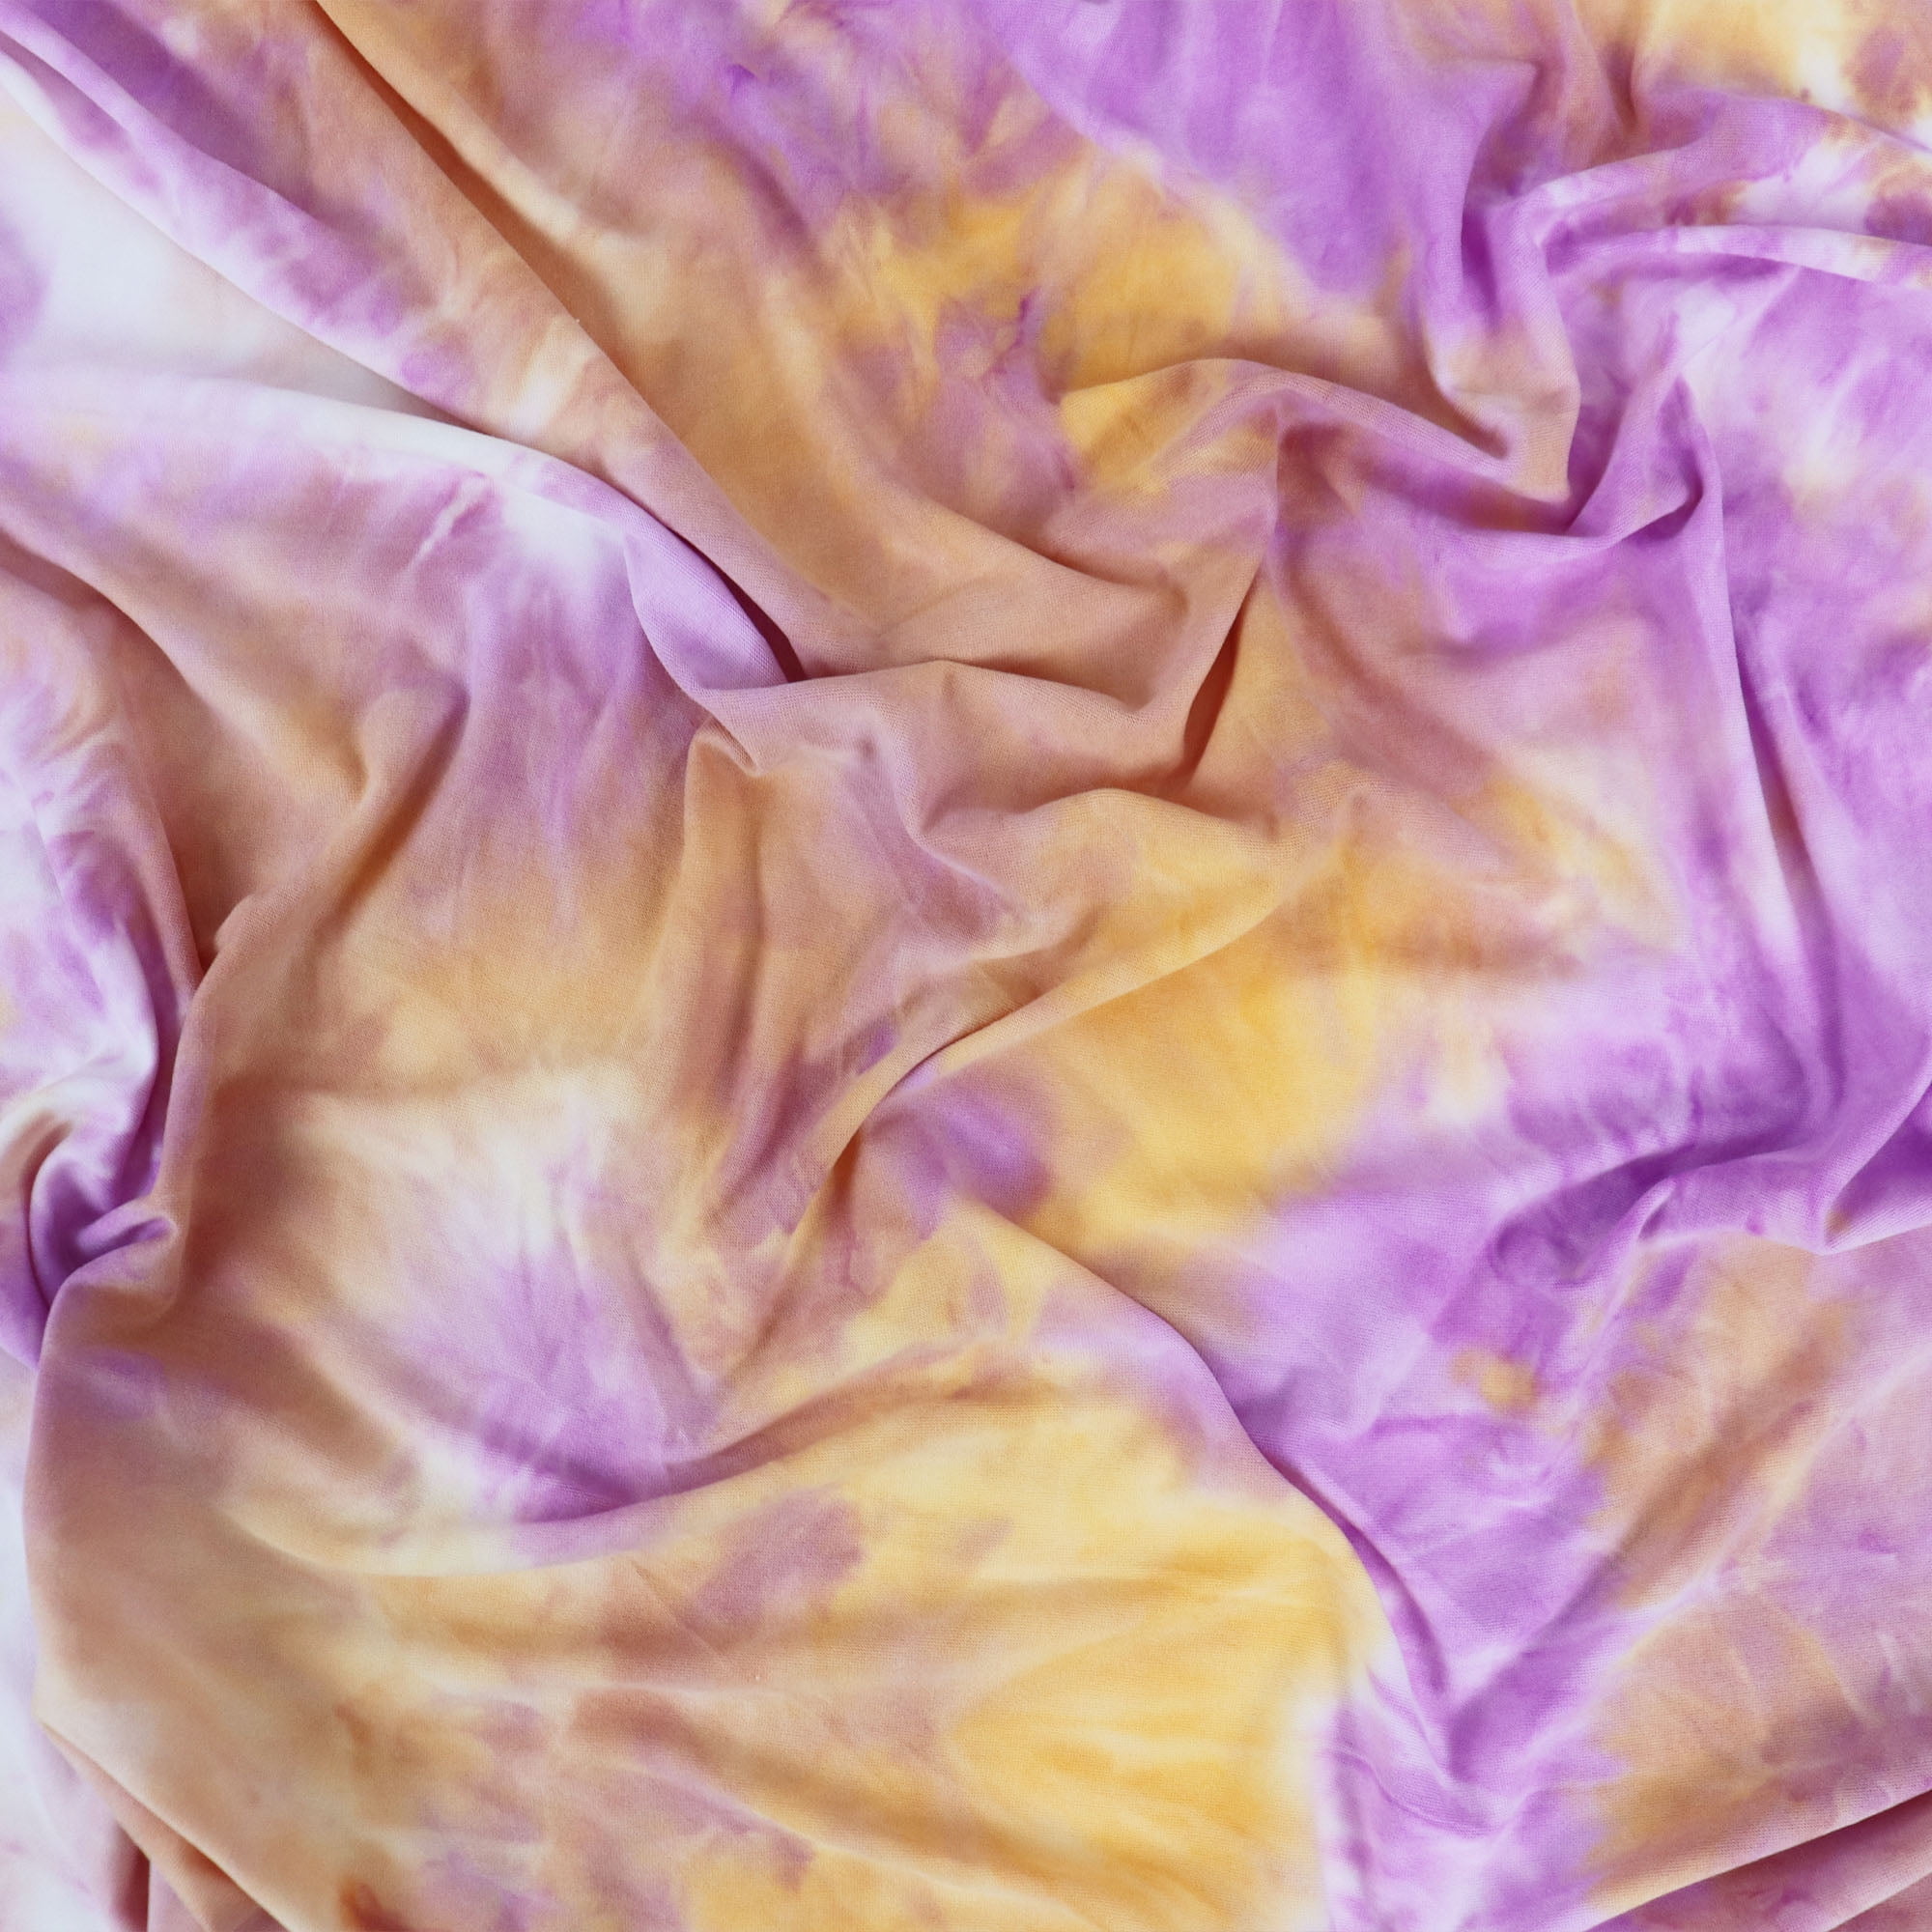 Romex Textiles Polyester Spandex Tie-Dye Knit Fabric - Purple/Yellow/Blue 